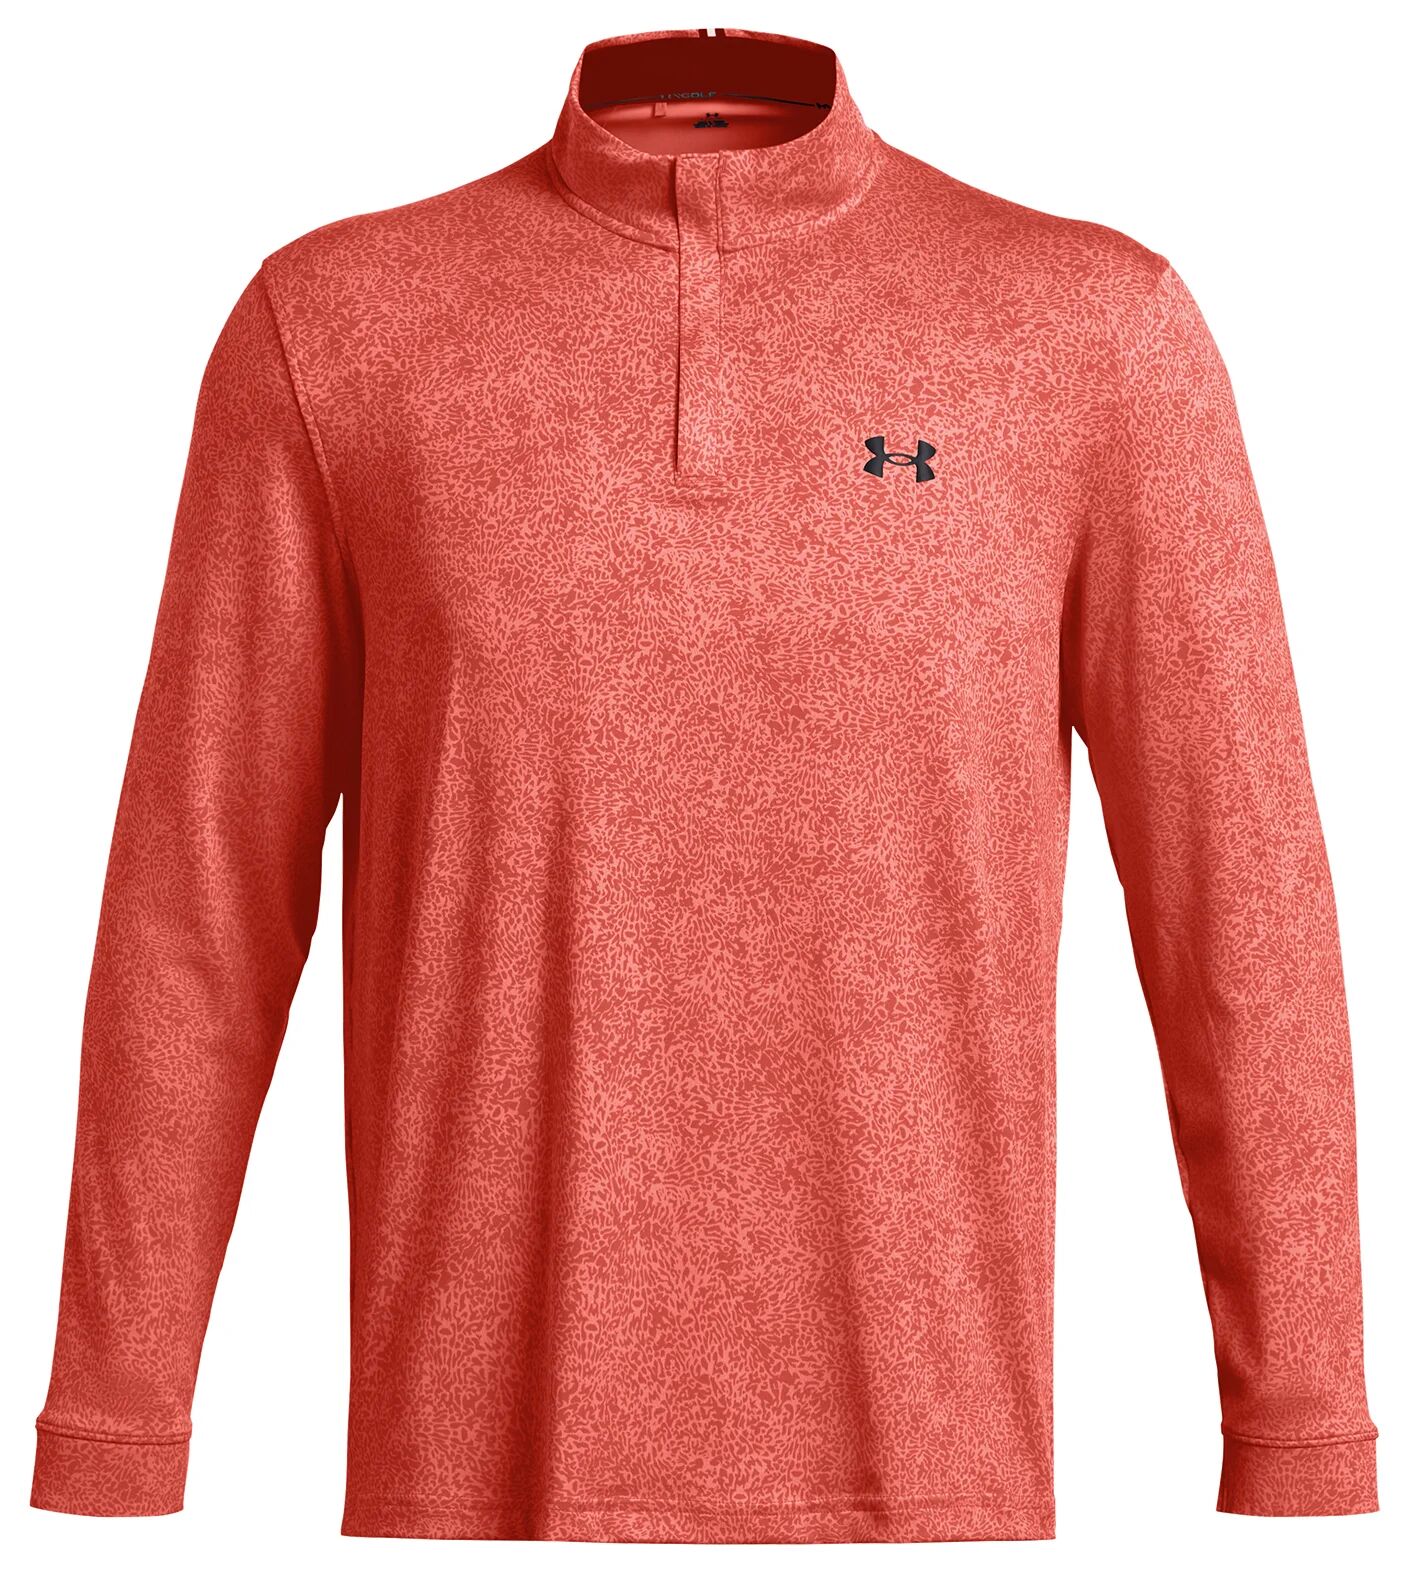 Under Armour UA Playoff Printed 1/4 Zip Men's Golf Pullover - Red, Size: Medium